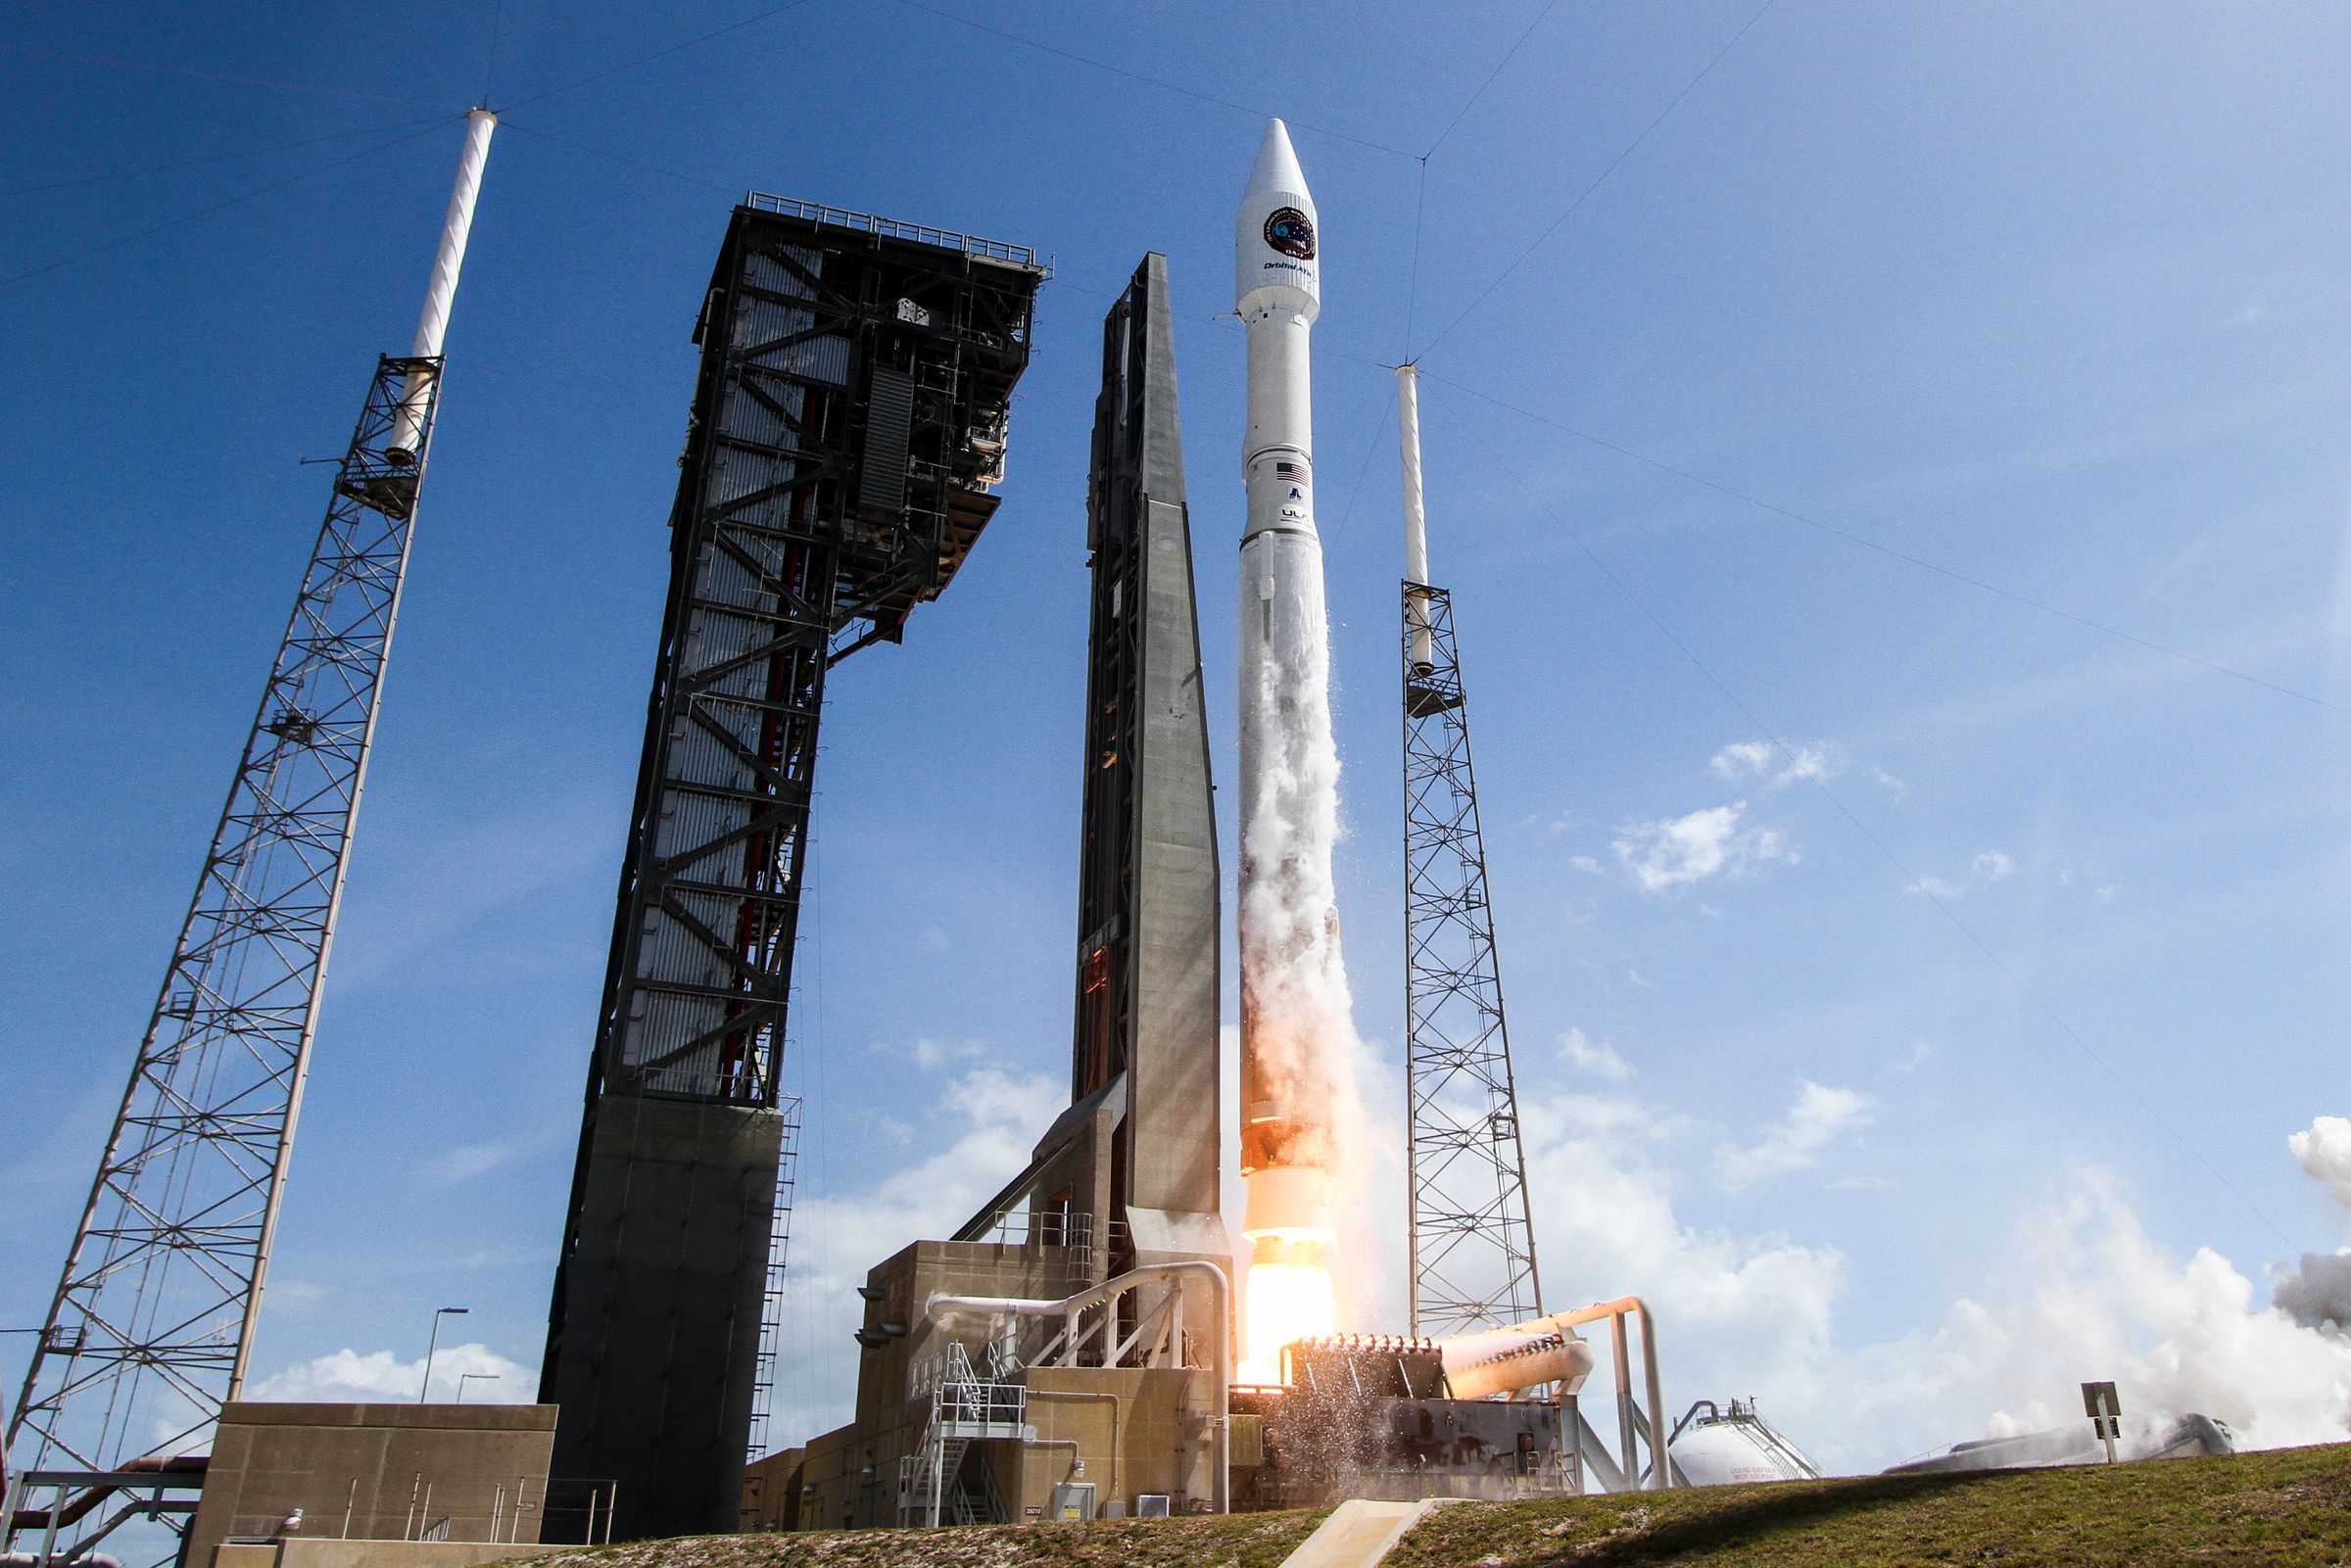 The United Launch Alliance’s Atlas V rocket